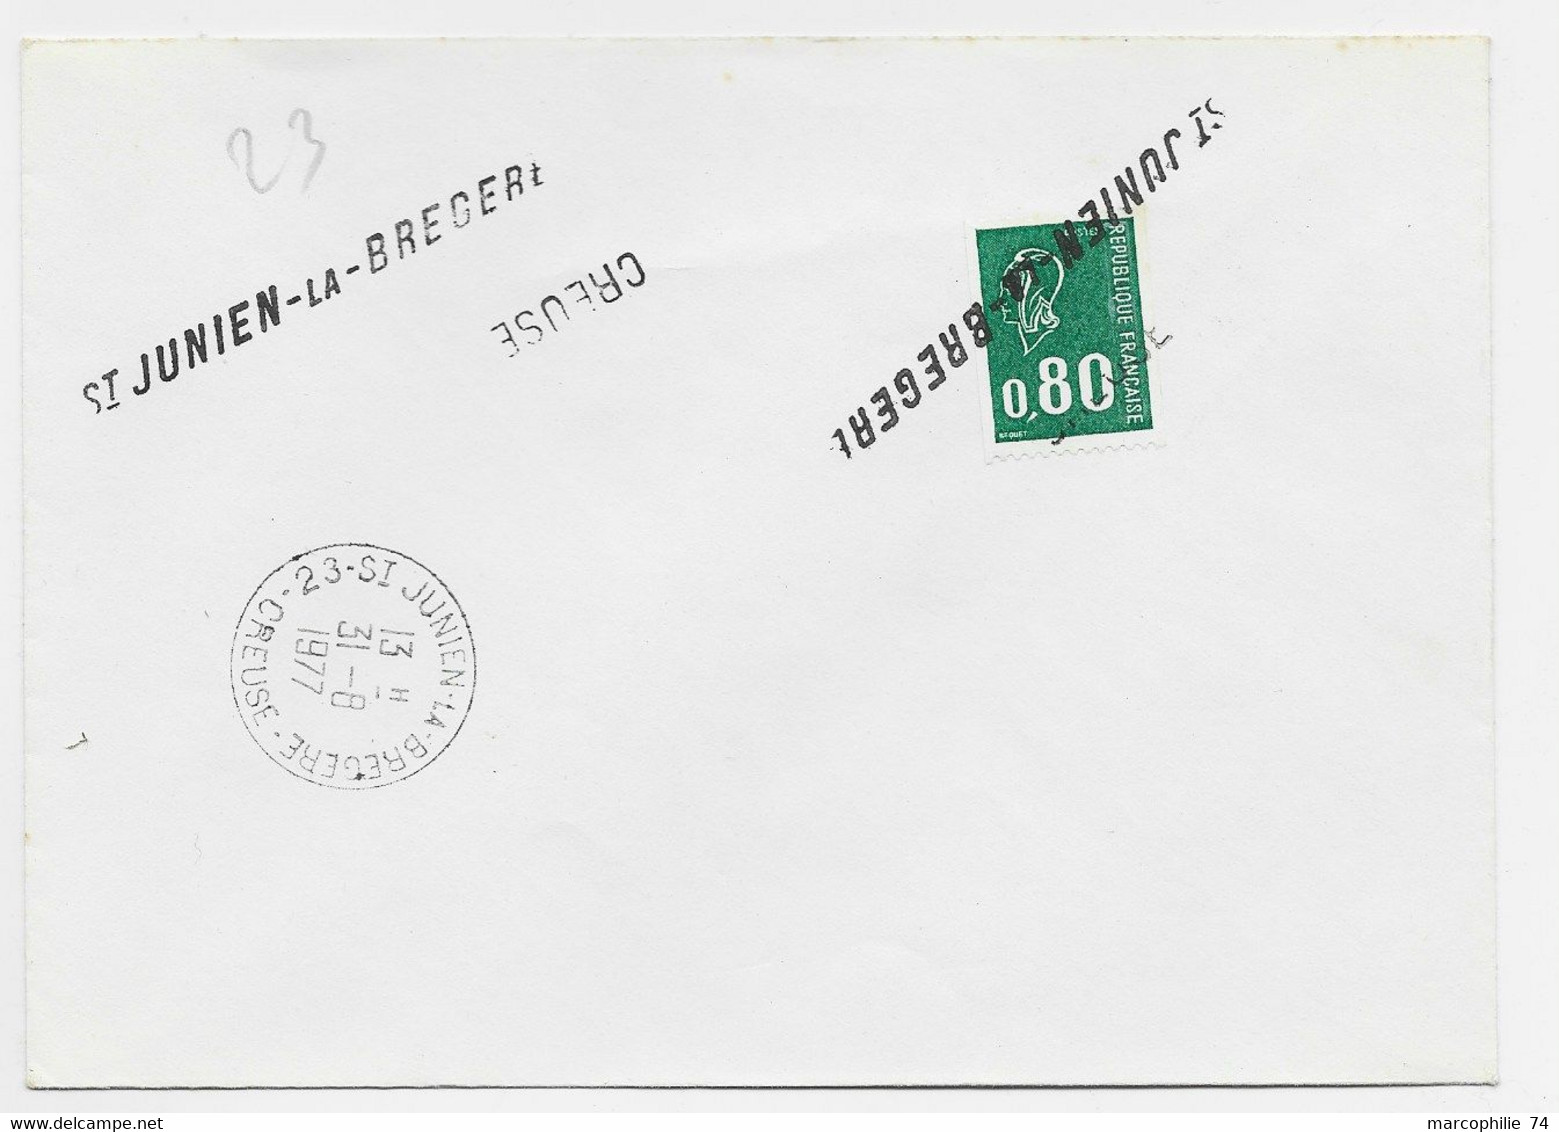 BEQUET 80C VERT LETTRE ANNULATION GRIFFE ST JULIEN LA BREGERE CREUSE + TIMBRE A DATE 31.8.1977 - Manual Postmarks